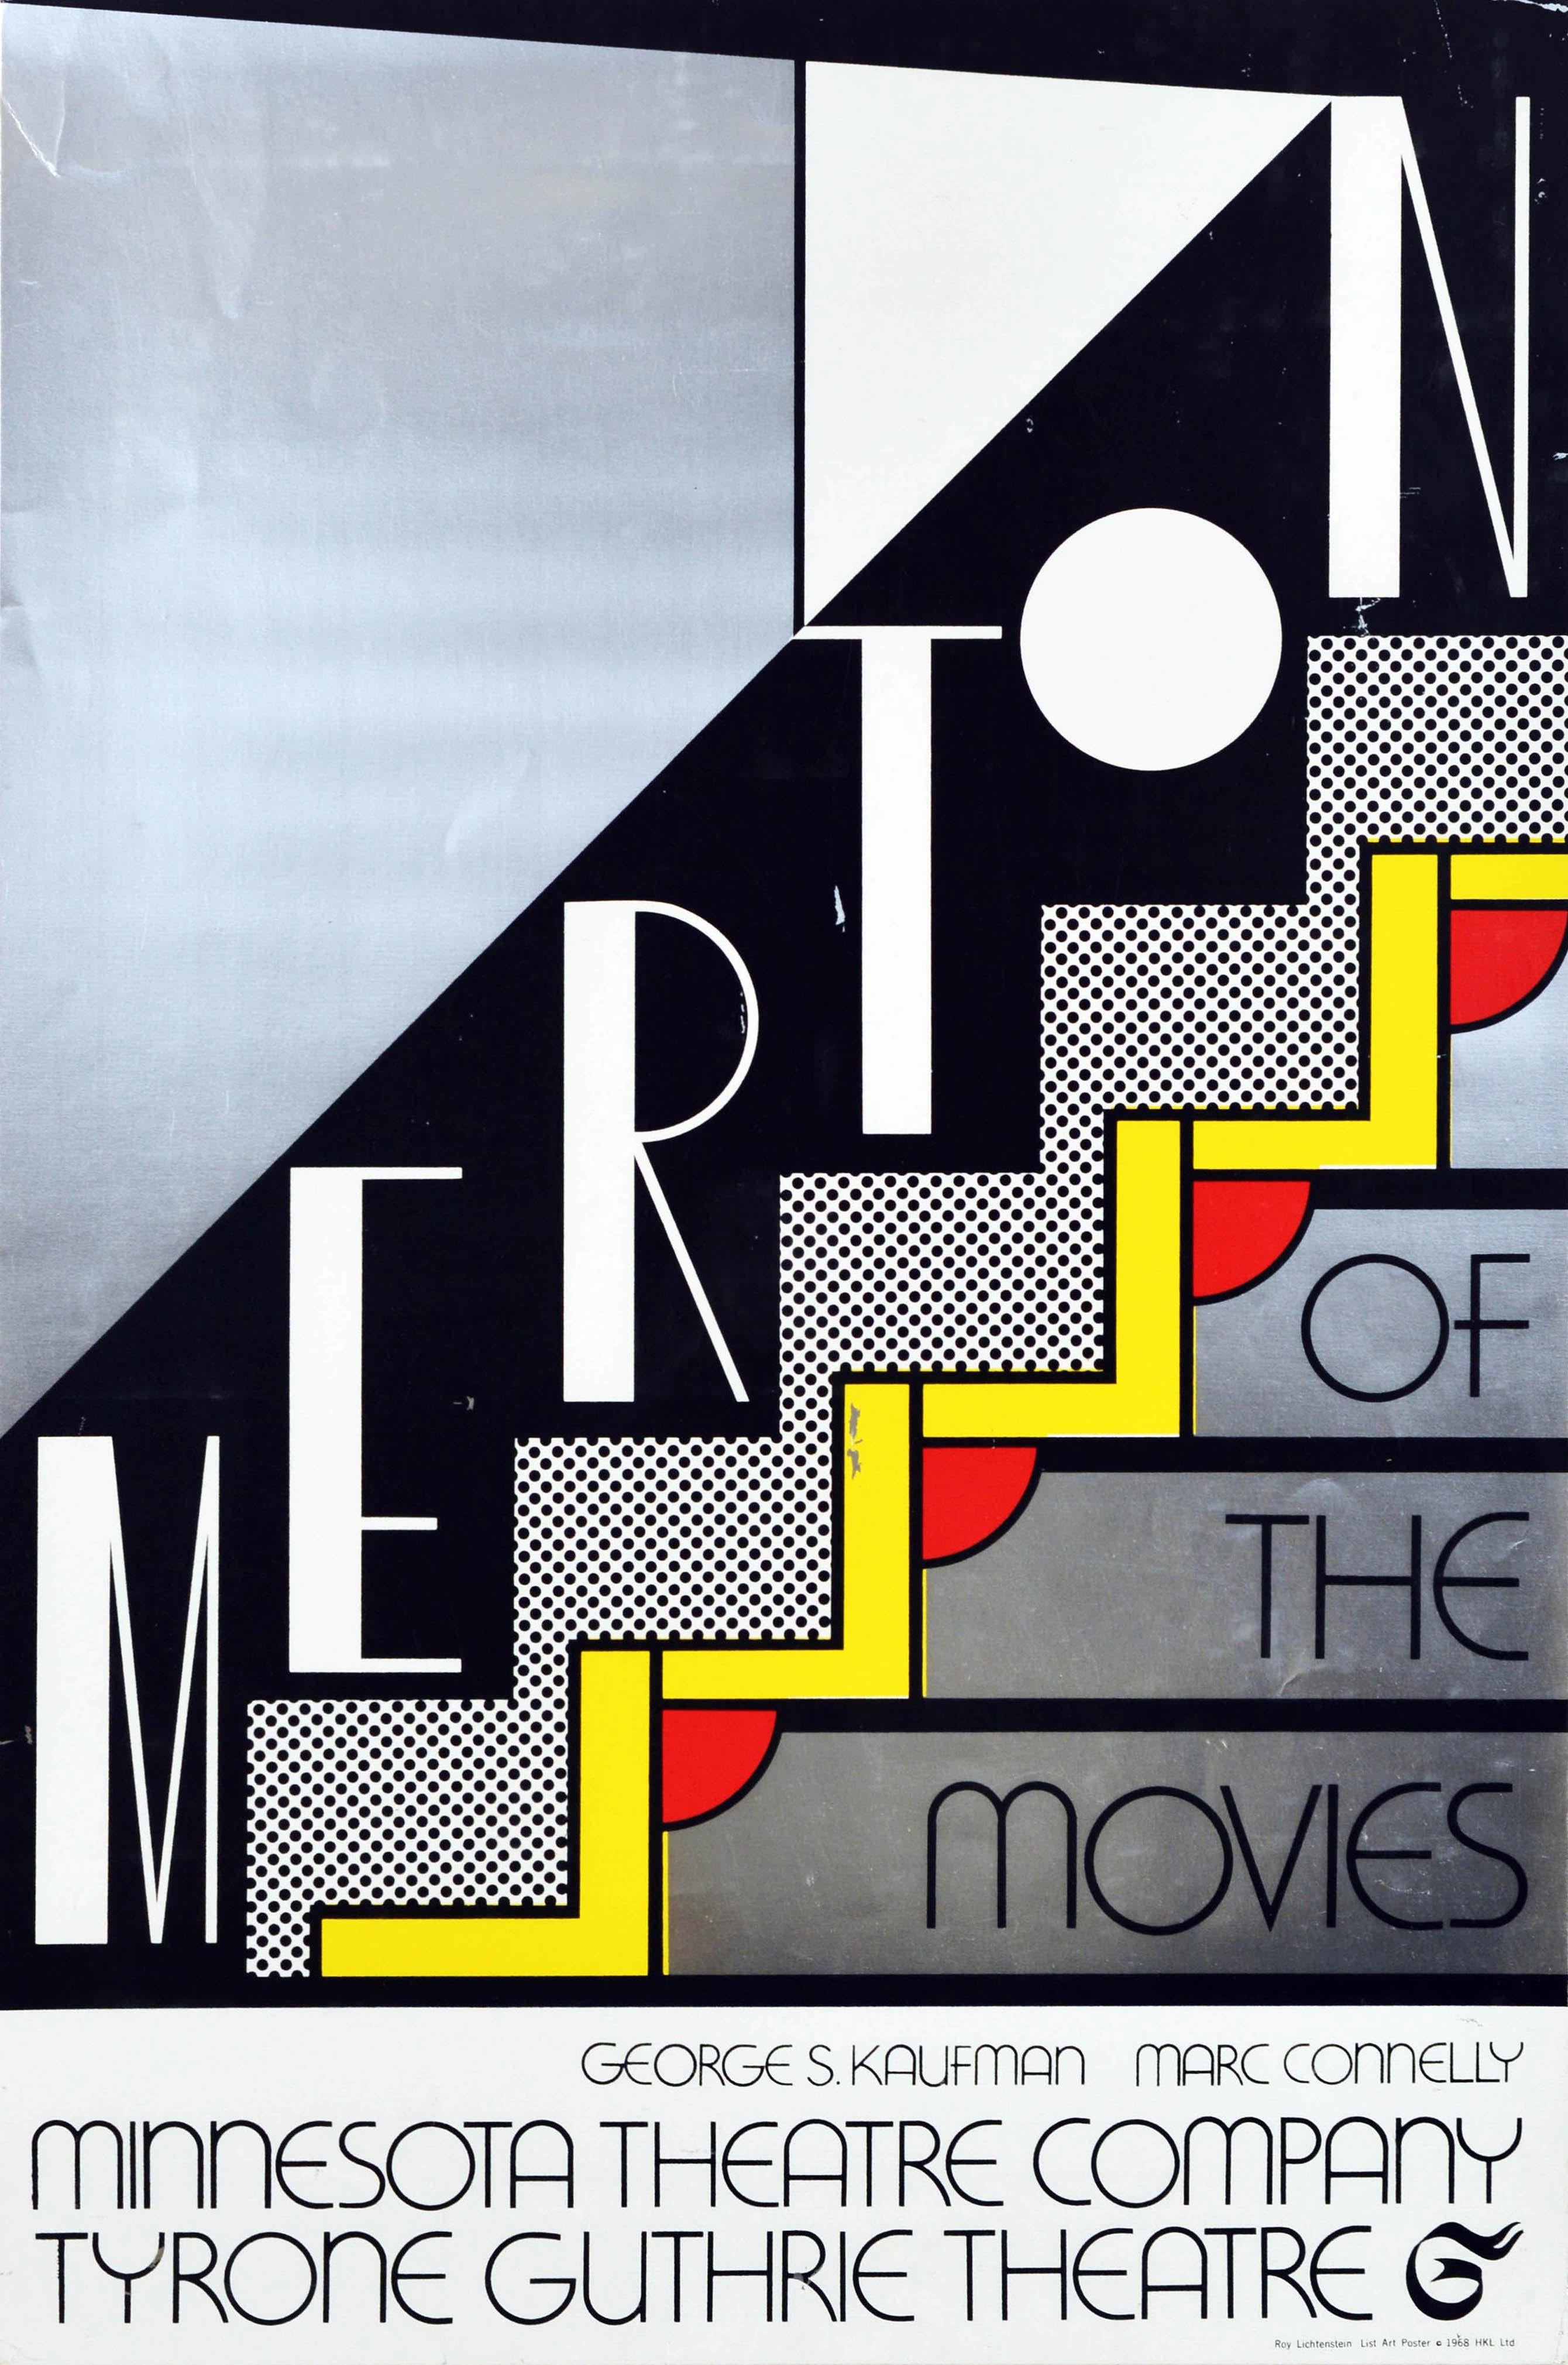 Roy Lichtenstein Print - Original Vintage Poster Merton Of The Movies Tyrone Guthrie Theatre Comedy Play